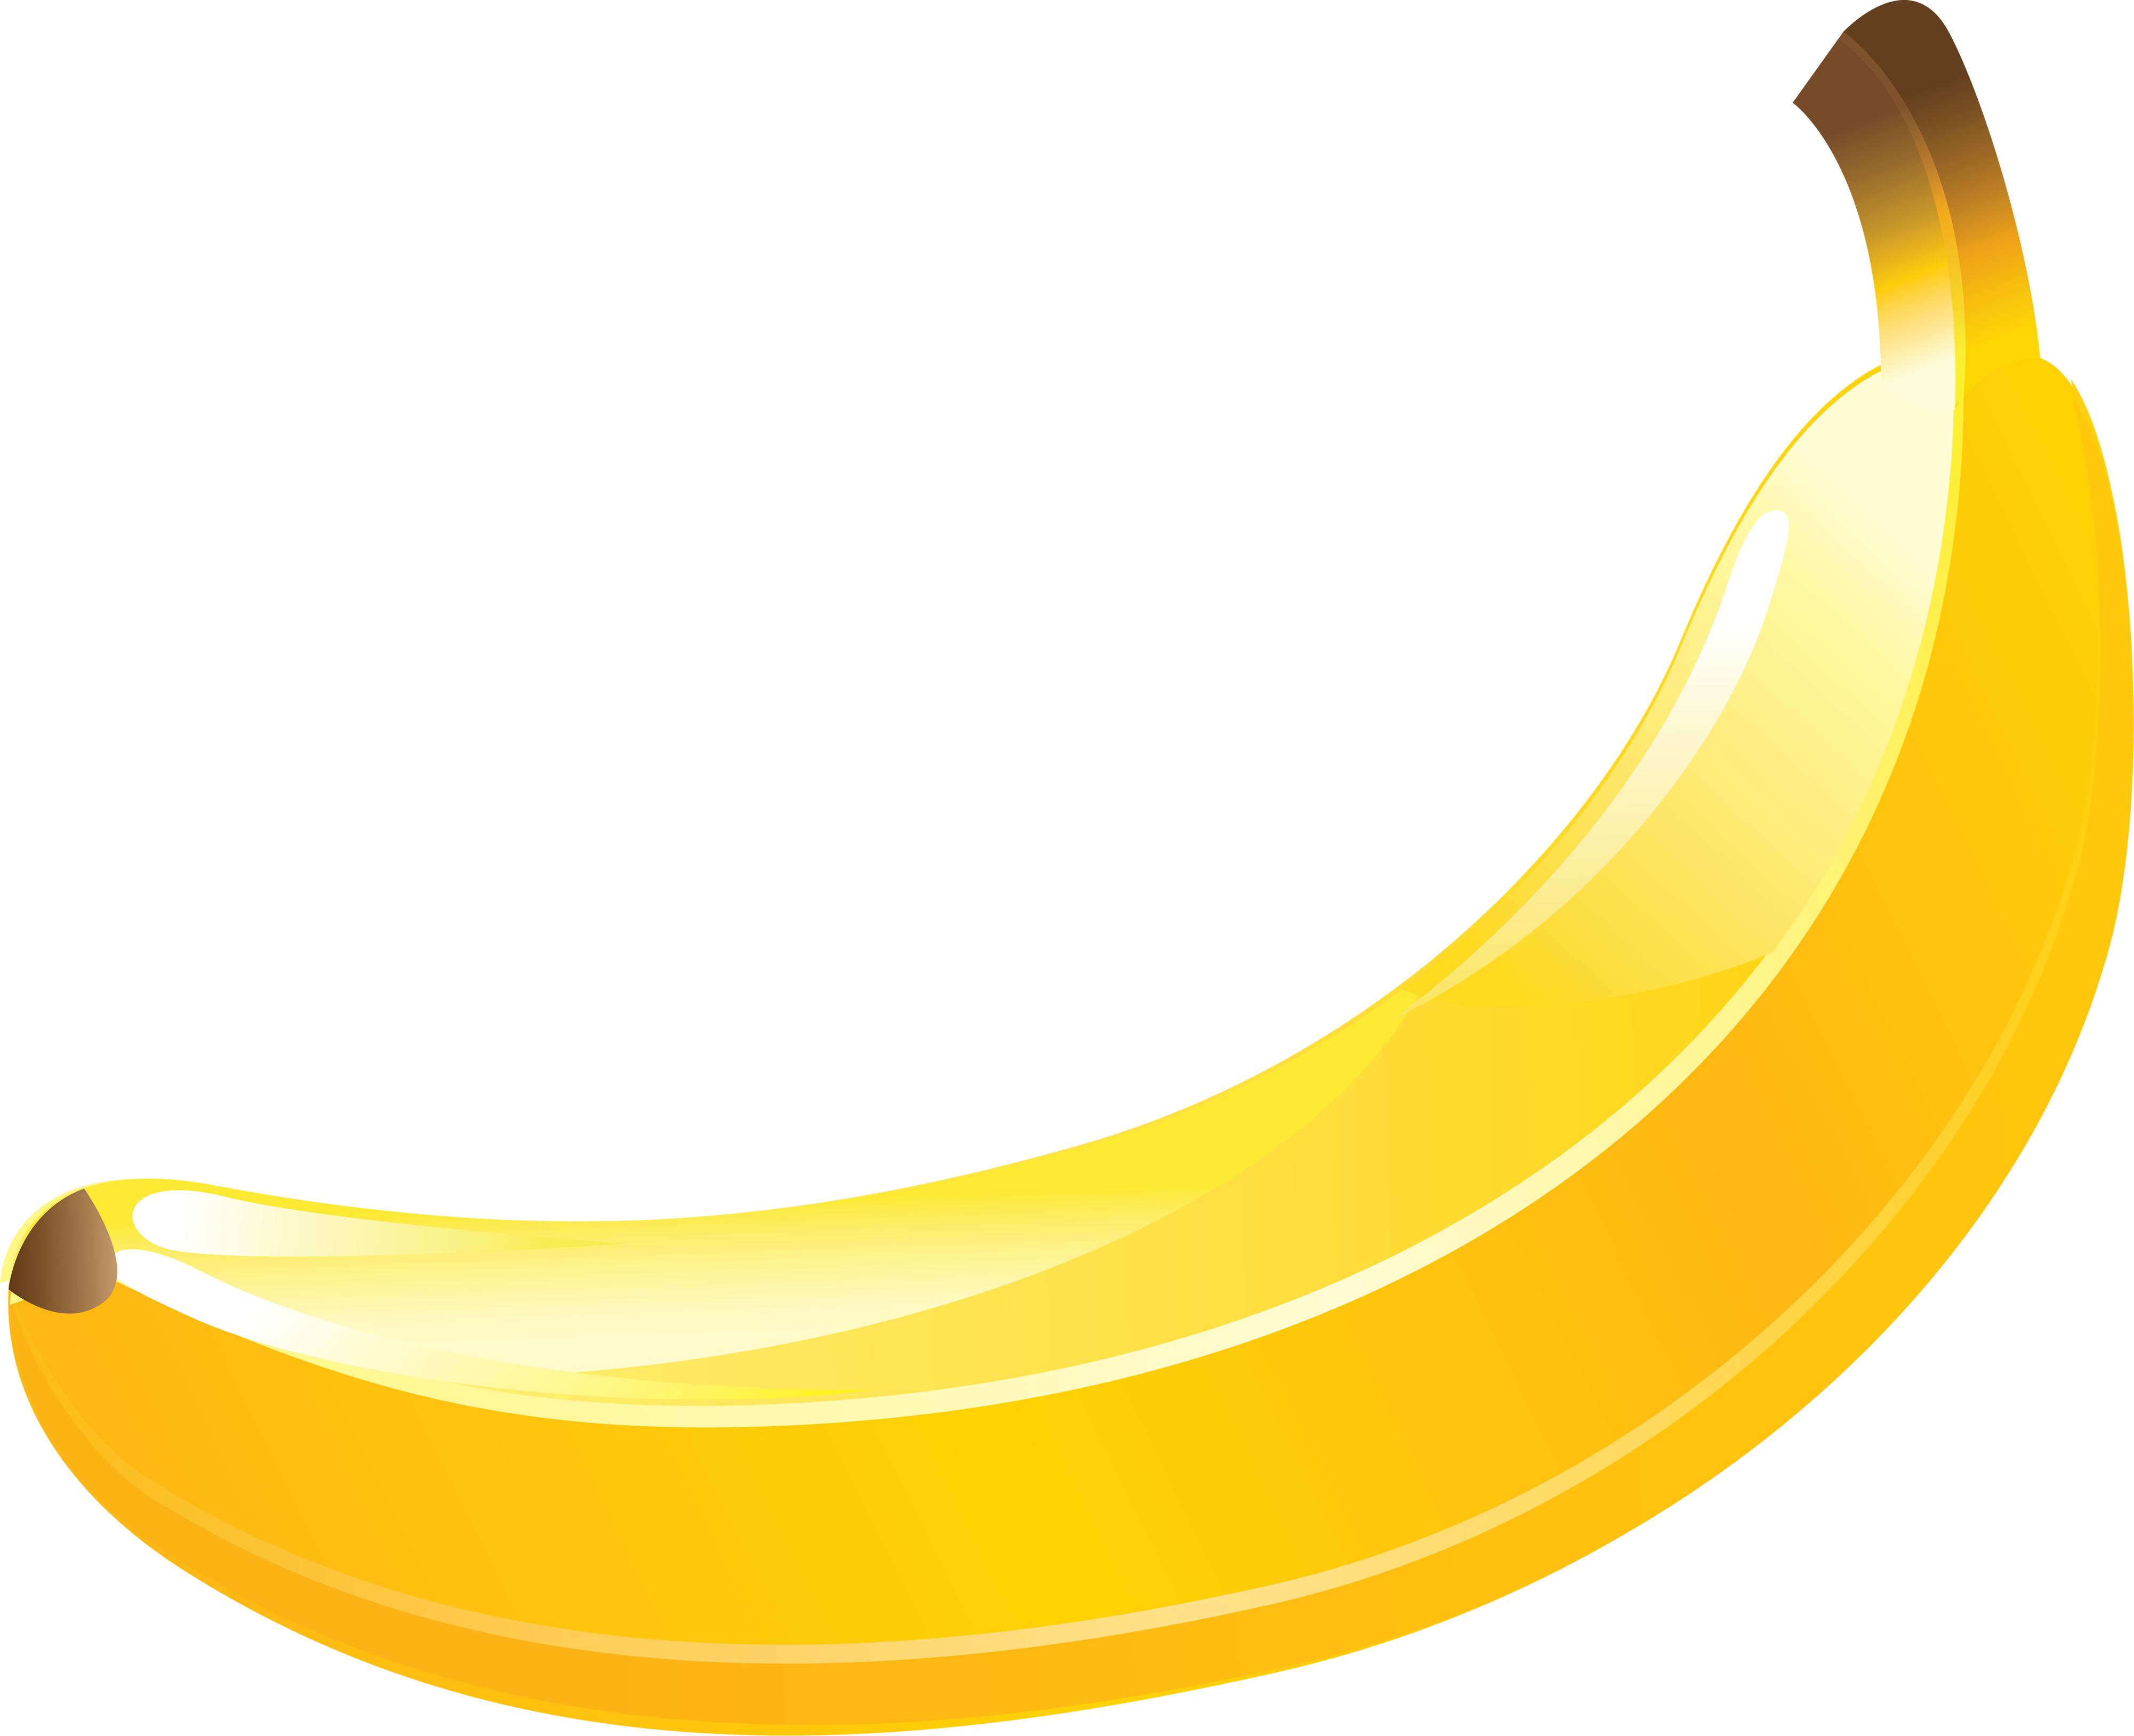 Banana amarela